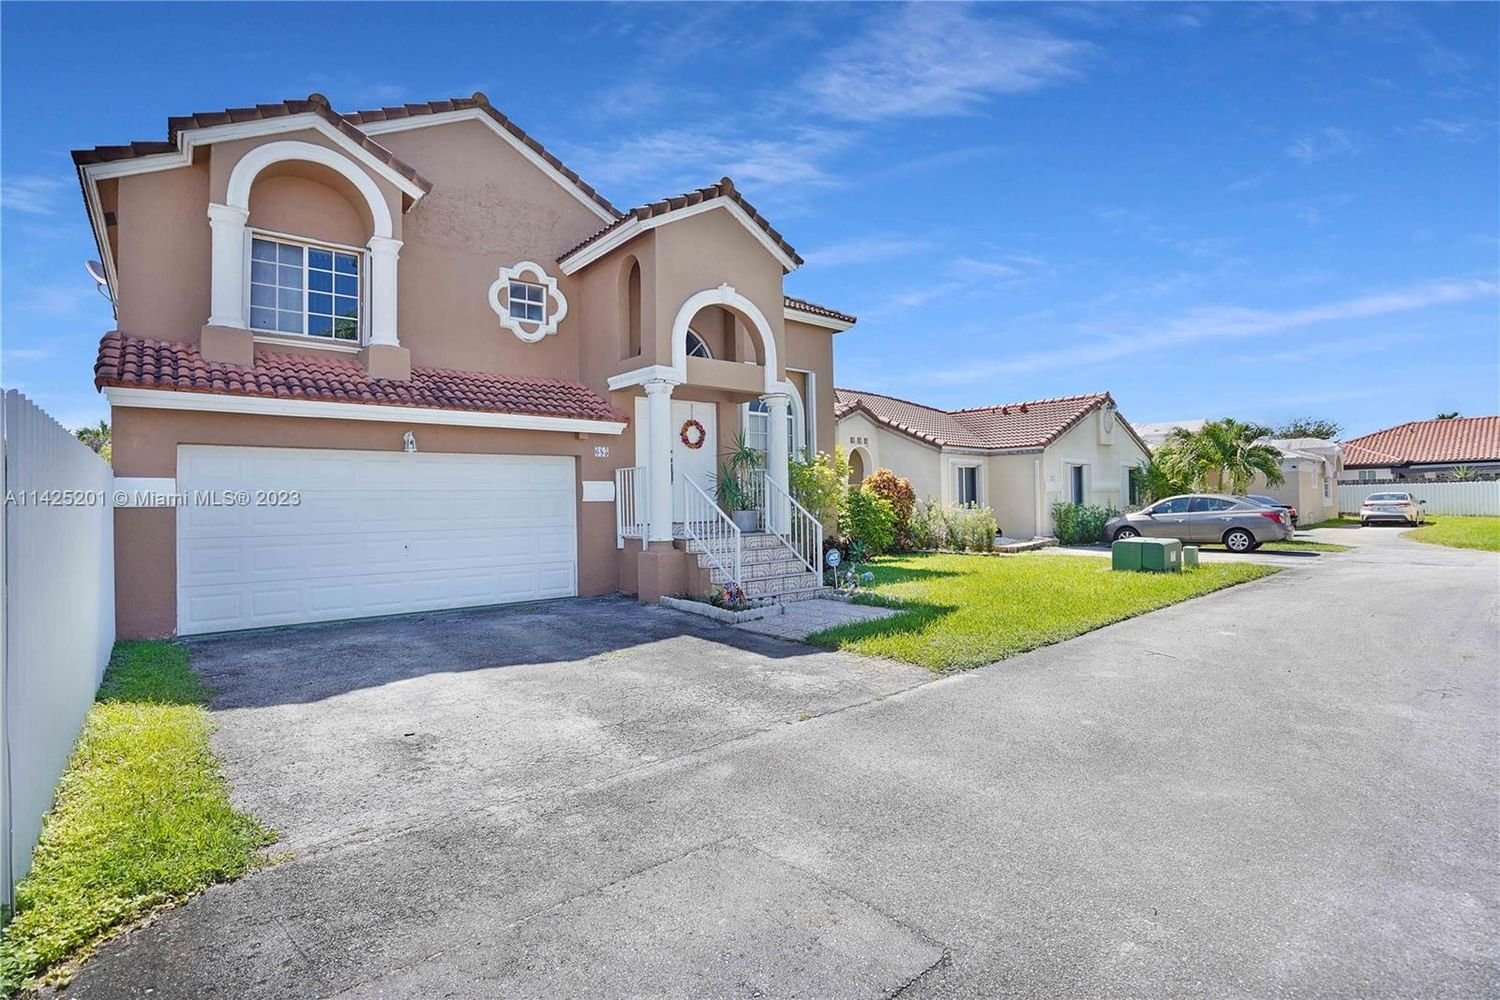 Real estate property located at 685 126th Ct, Miami-Dade County, Miami, FL